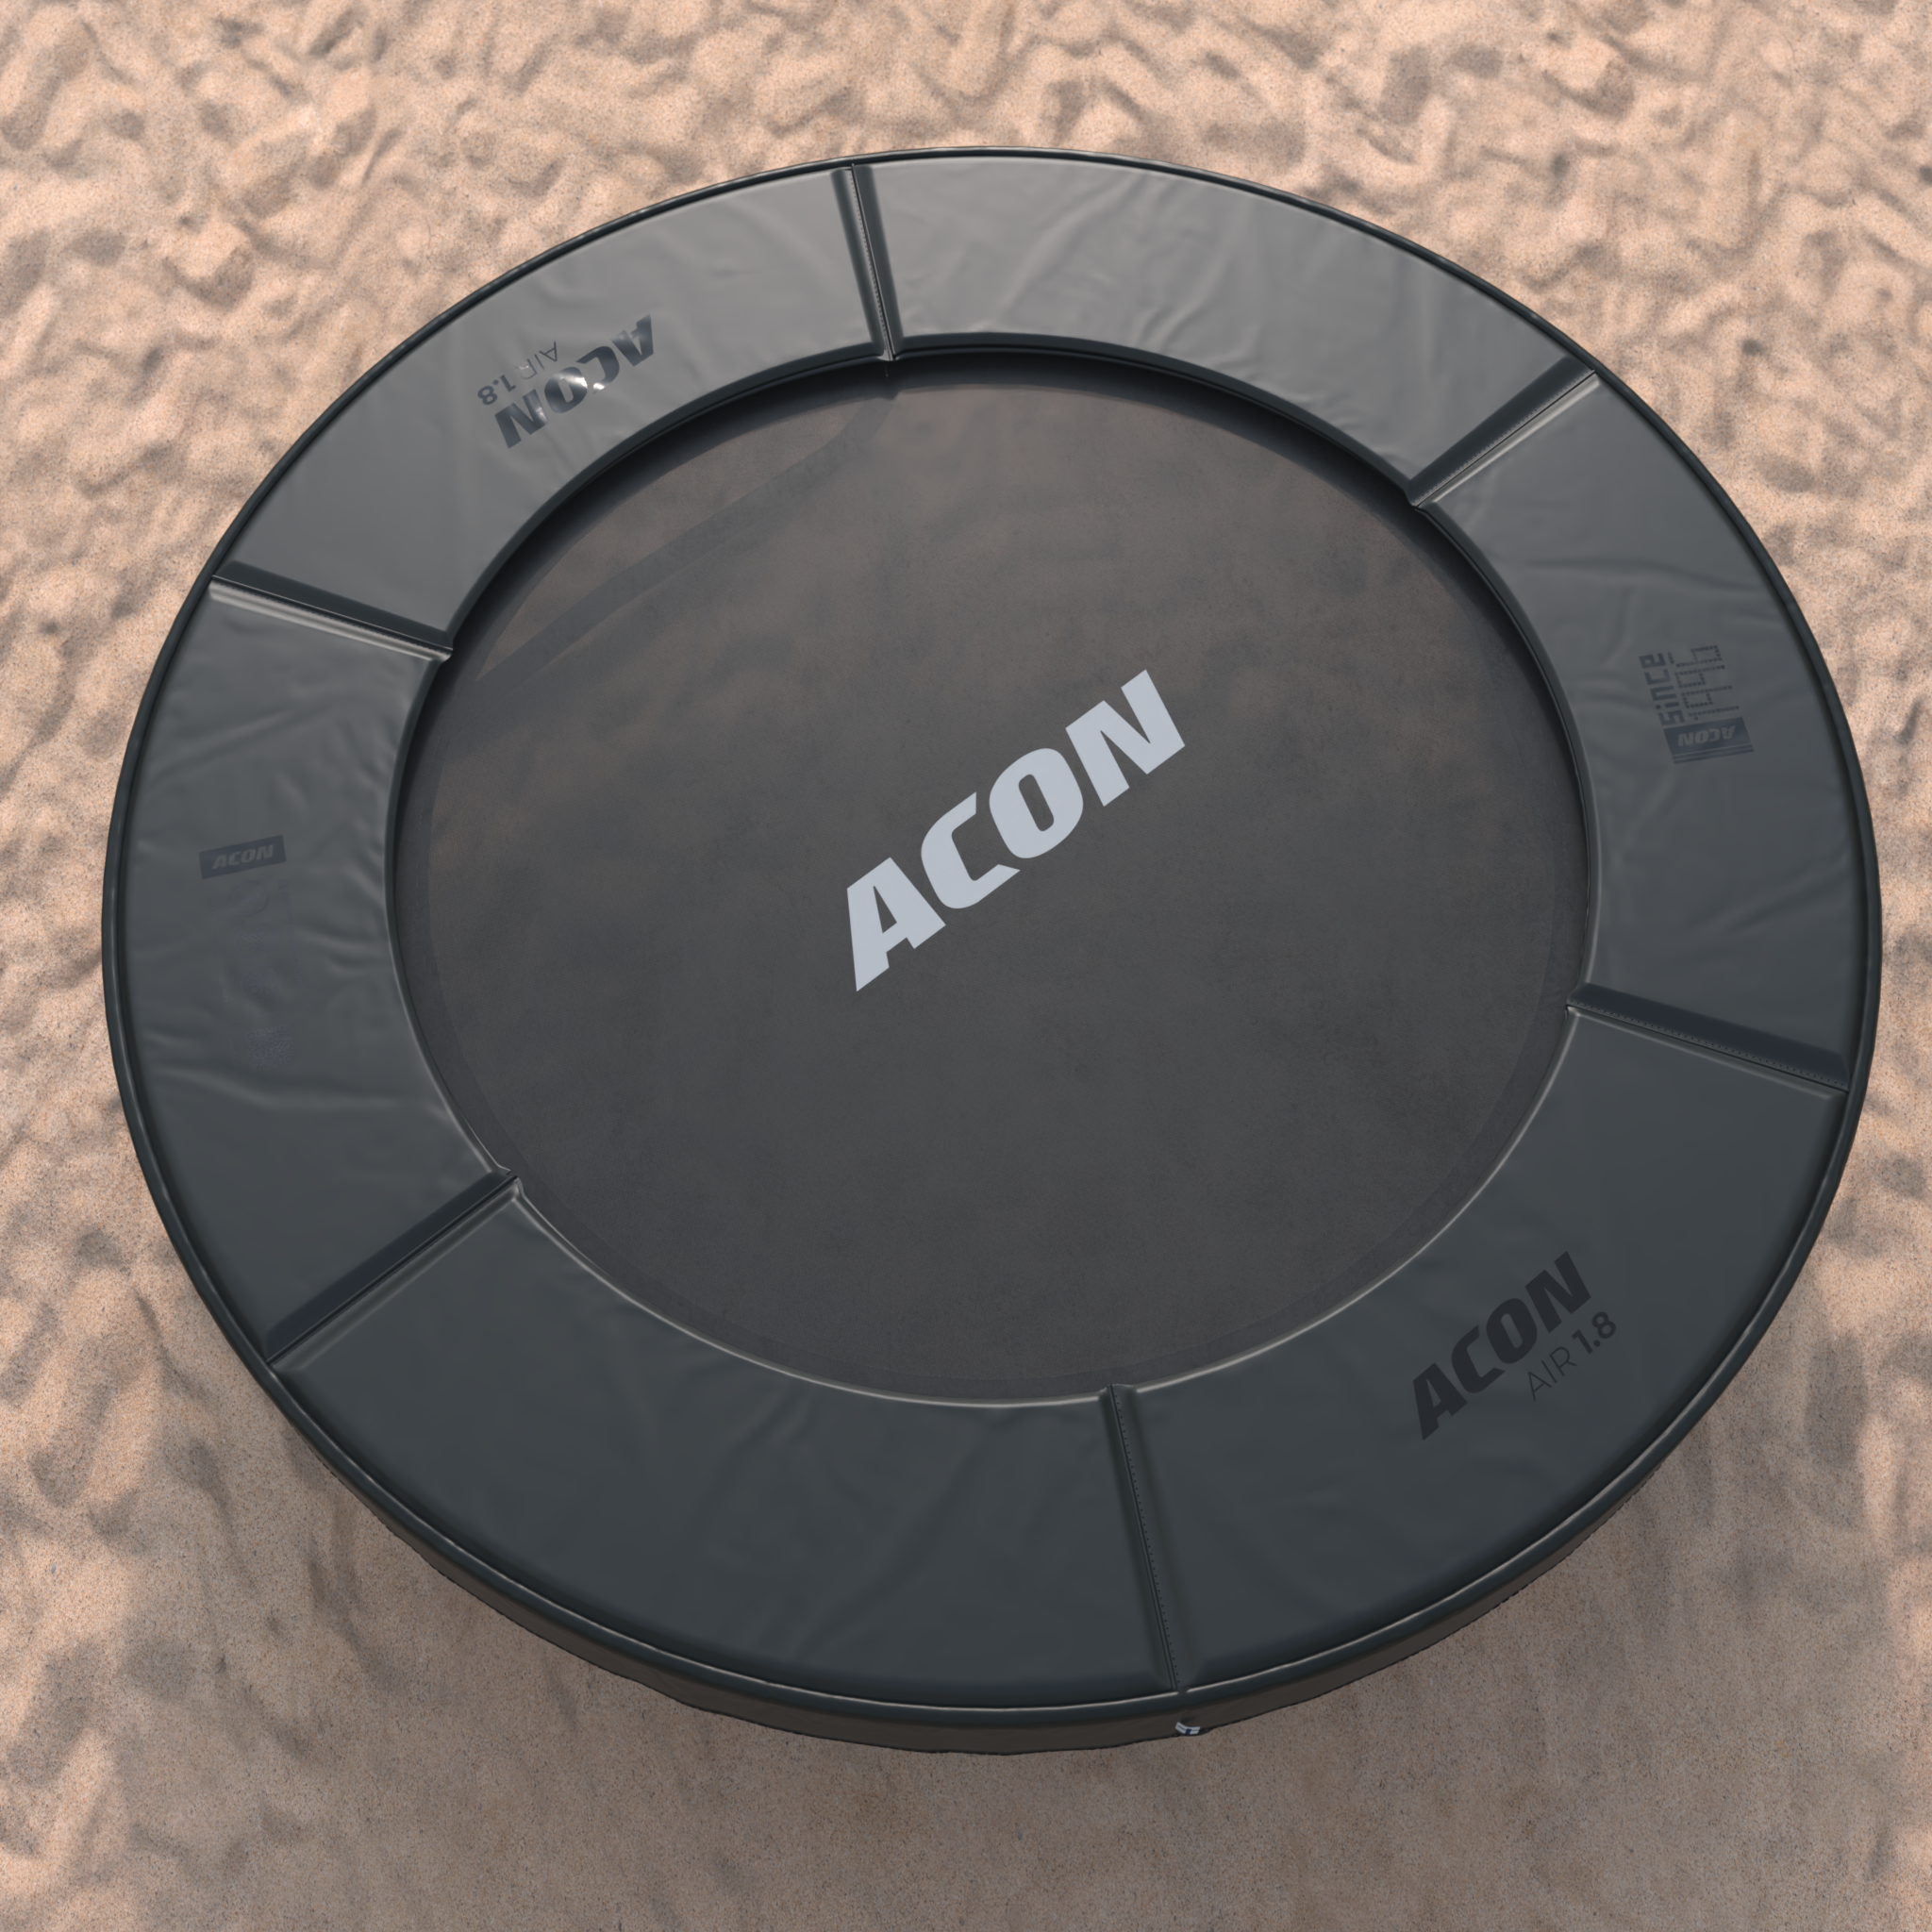 Acon Air 1.8m Trampoliini Black Edition